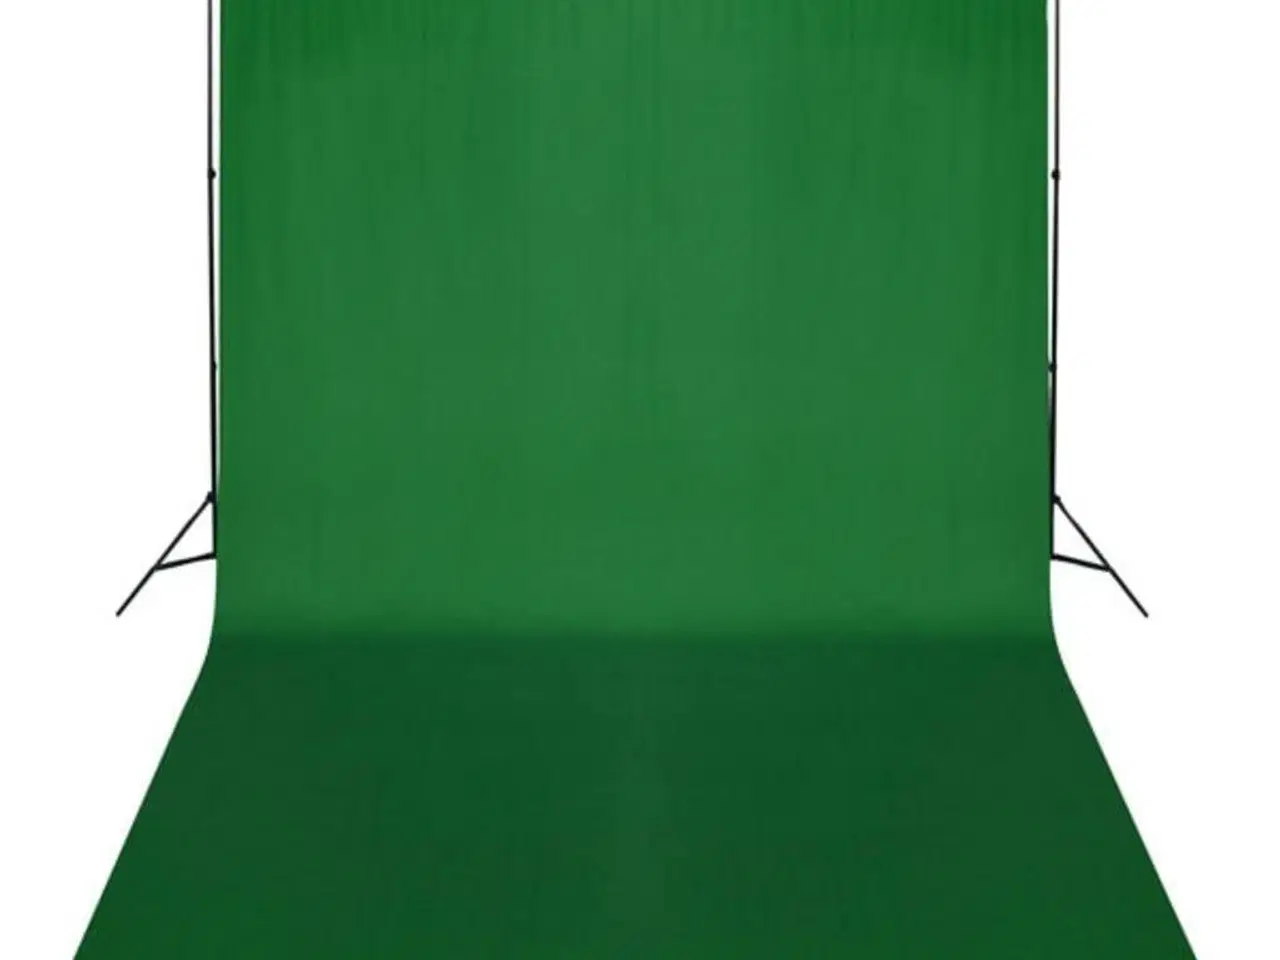 Billede 2 - Fotobaggrund i bomuld grøn 500 x 300 cm chroma key